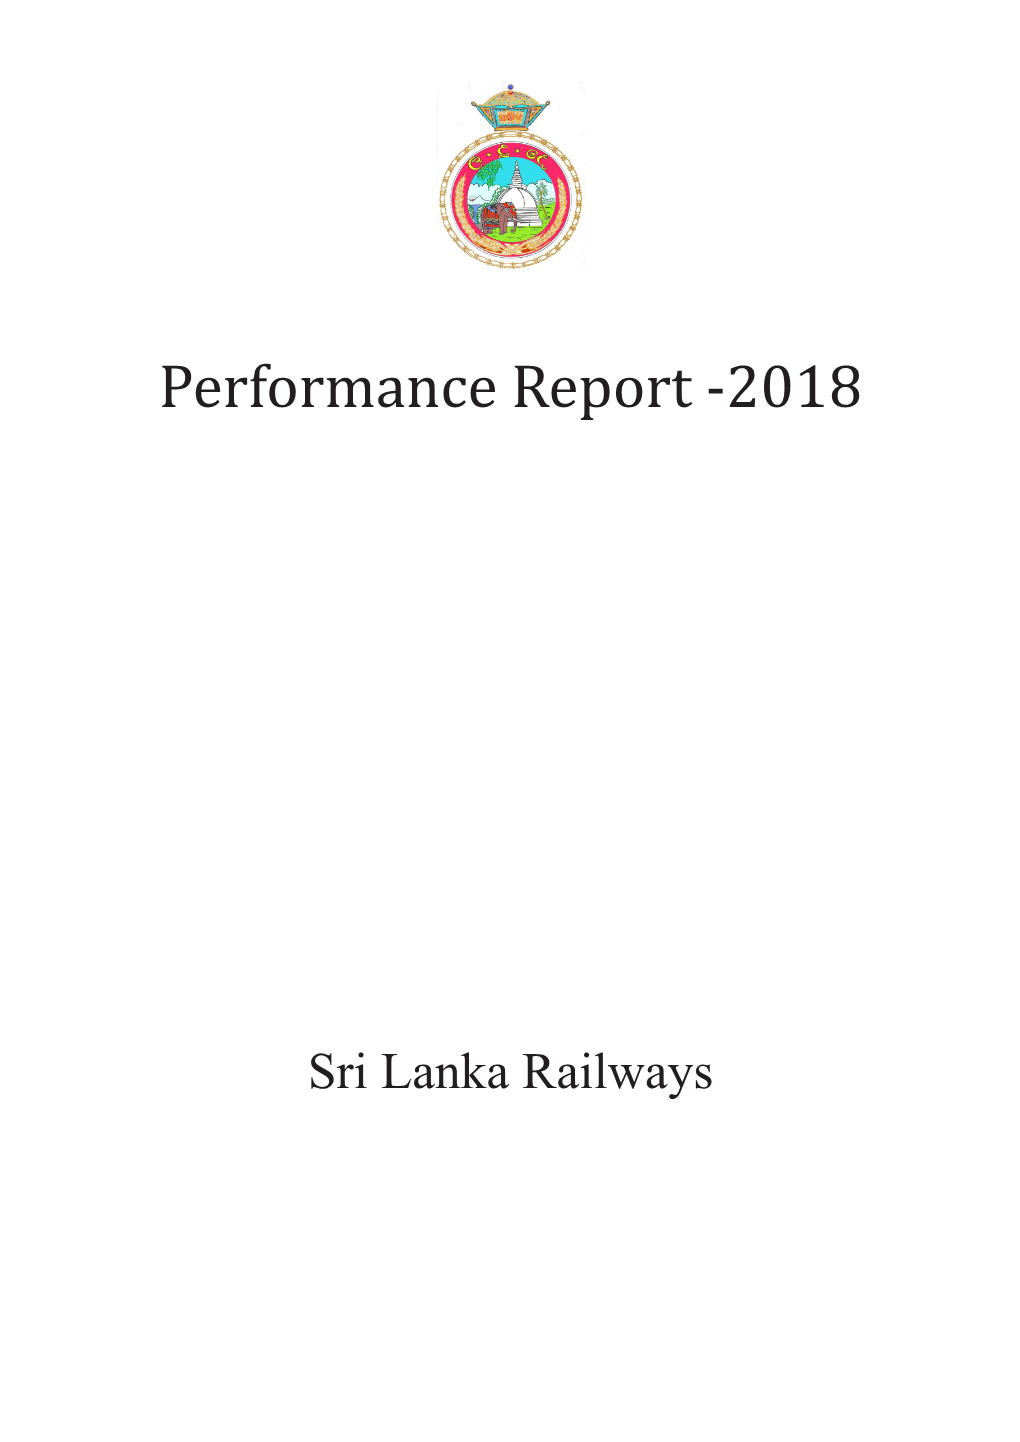 Performance Report of the Department of Sri Lanka Railway